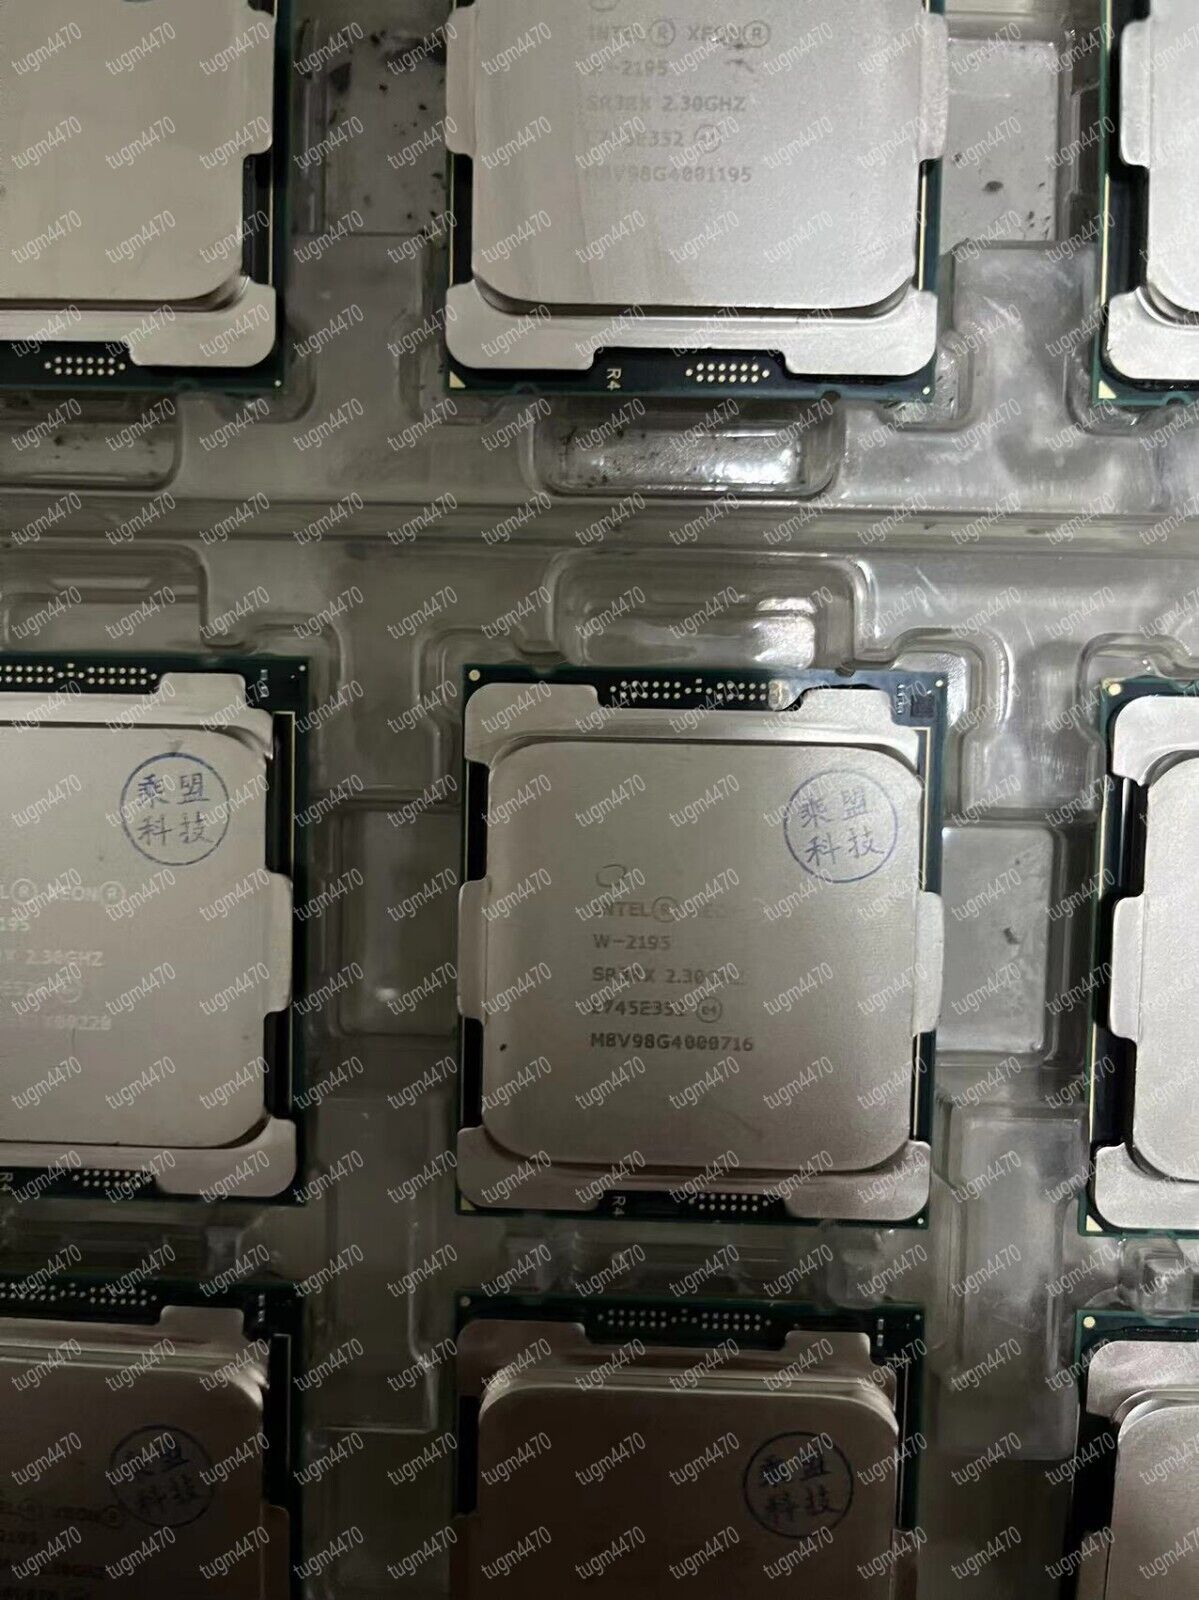 Intel Xeon w-2195 CPU processor sr3rx 2.3ghz 18-core 24.75mb lga-2066 server one